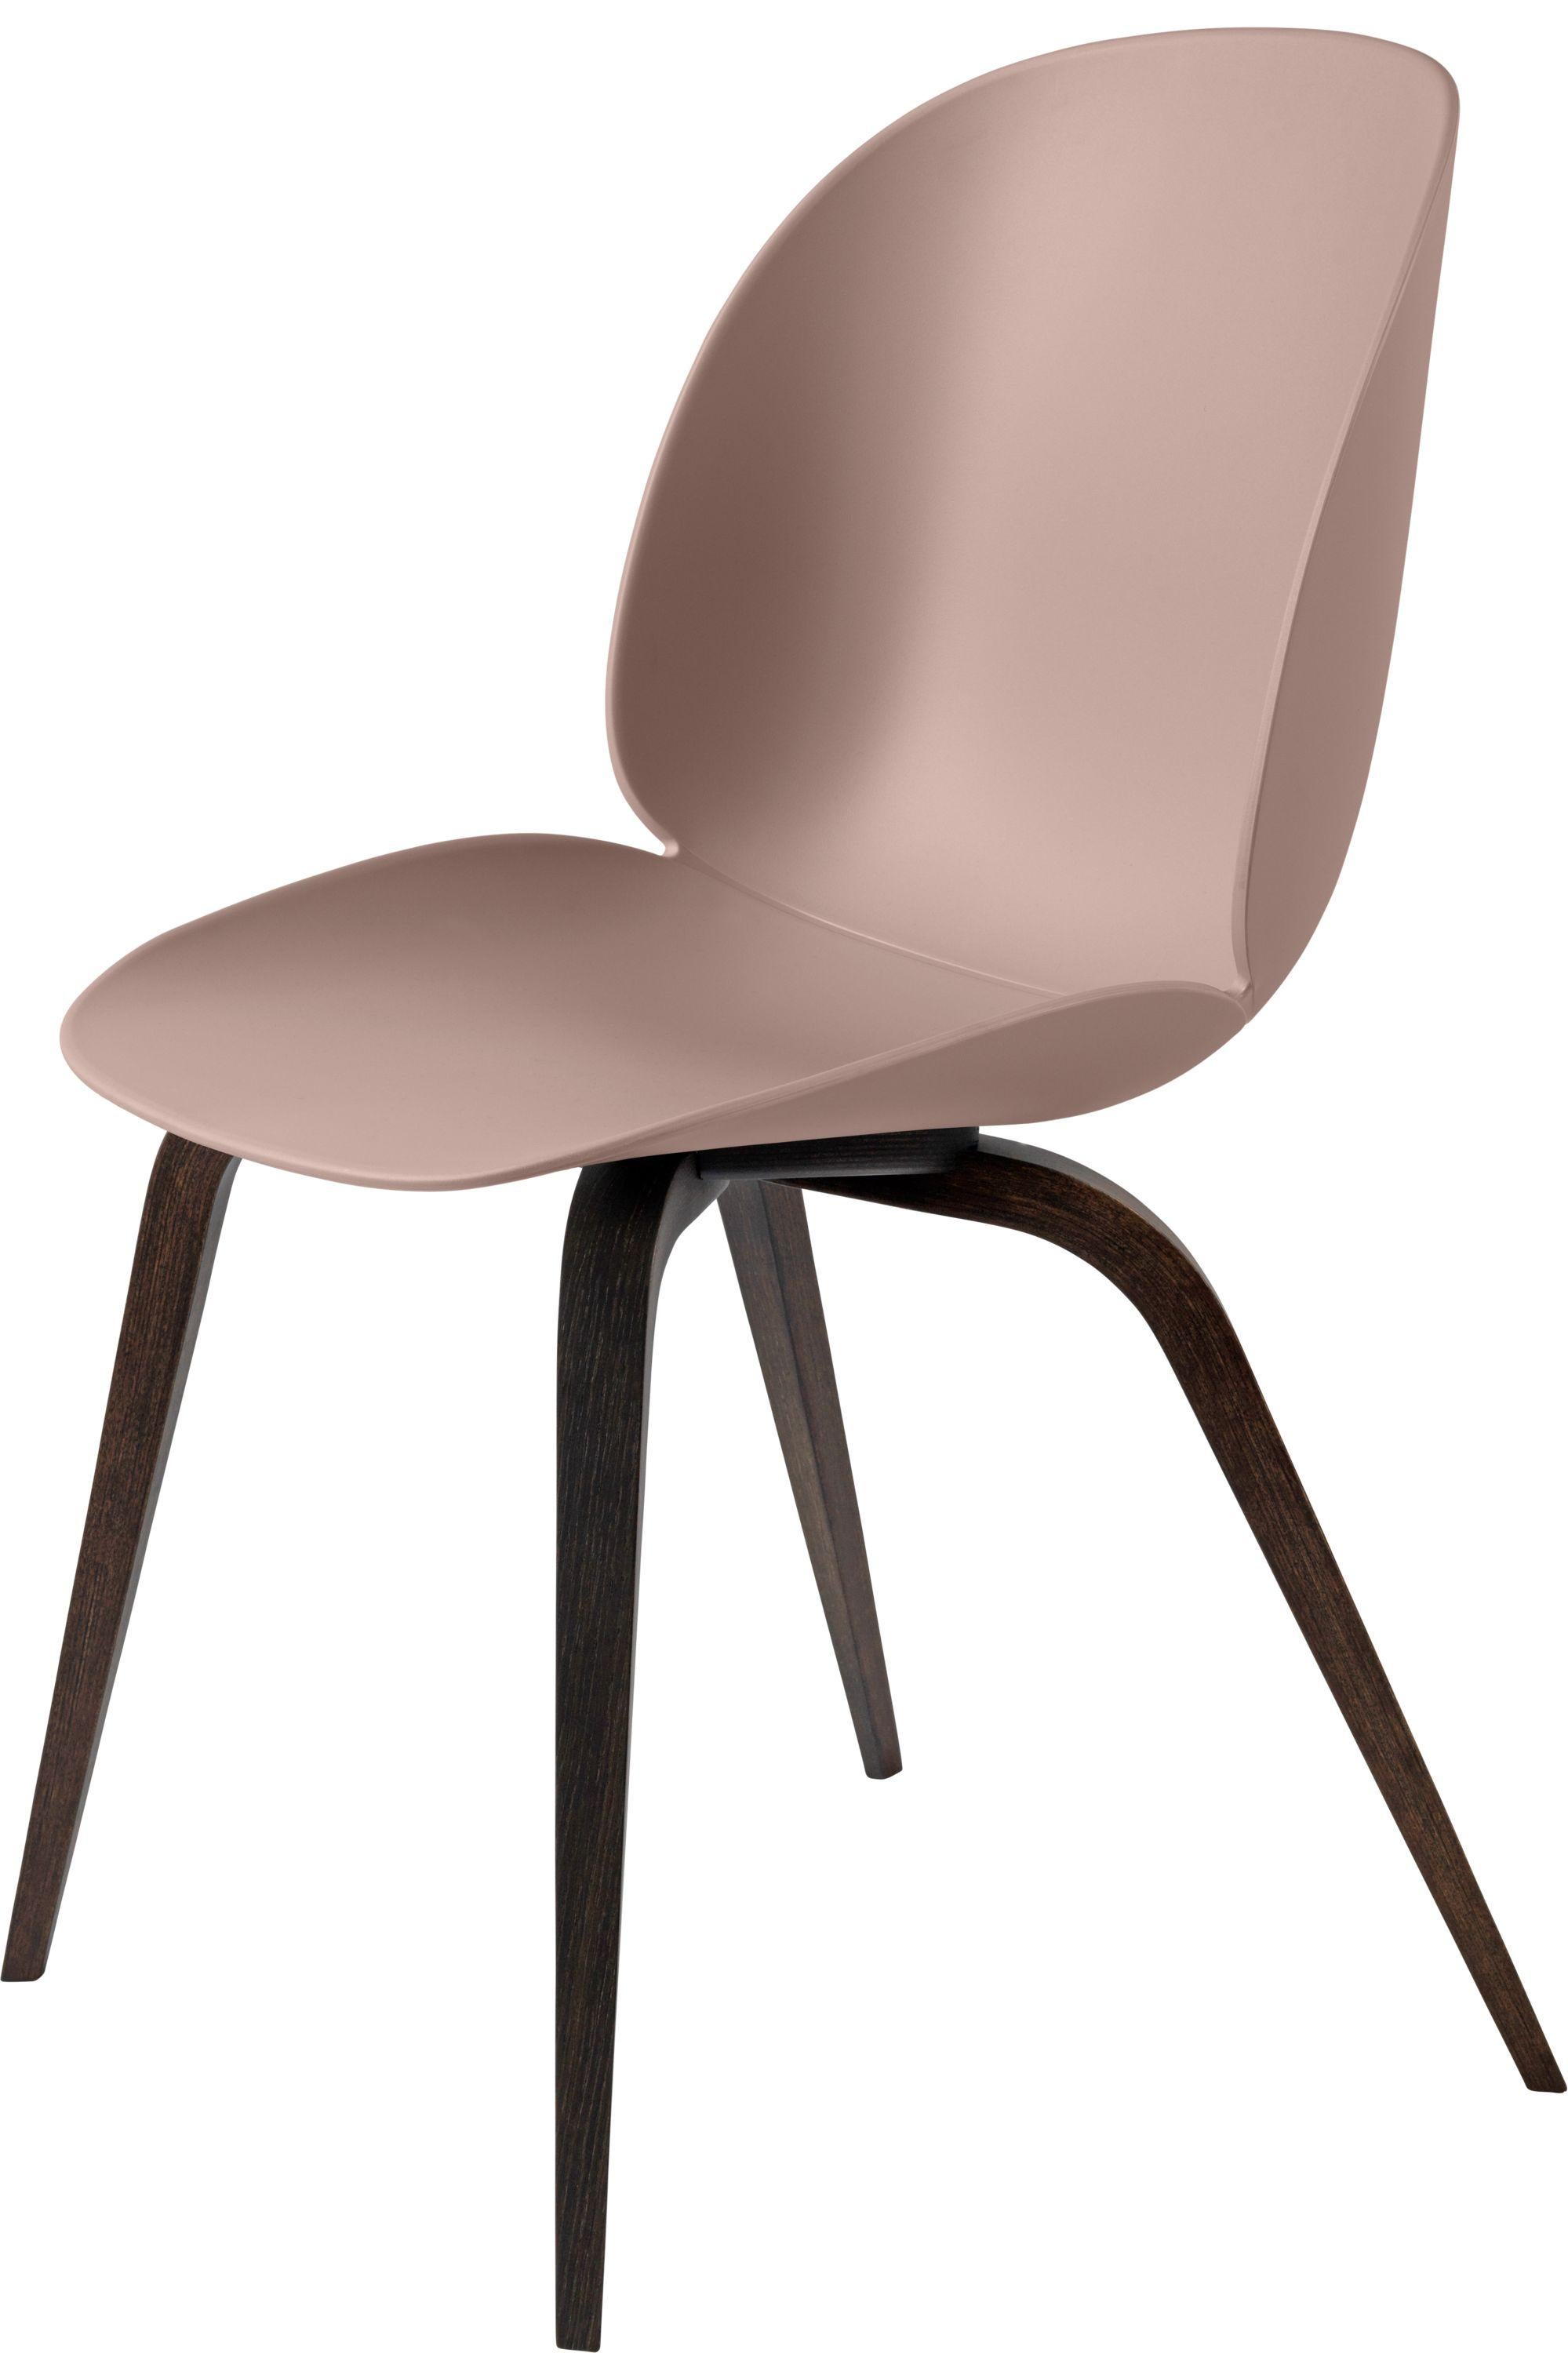 GamFratesi 'Beetle' Dining Chair with Smoked Oak Conic Base 2